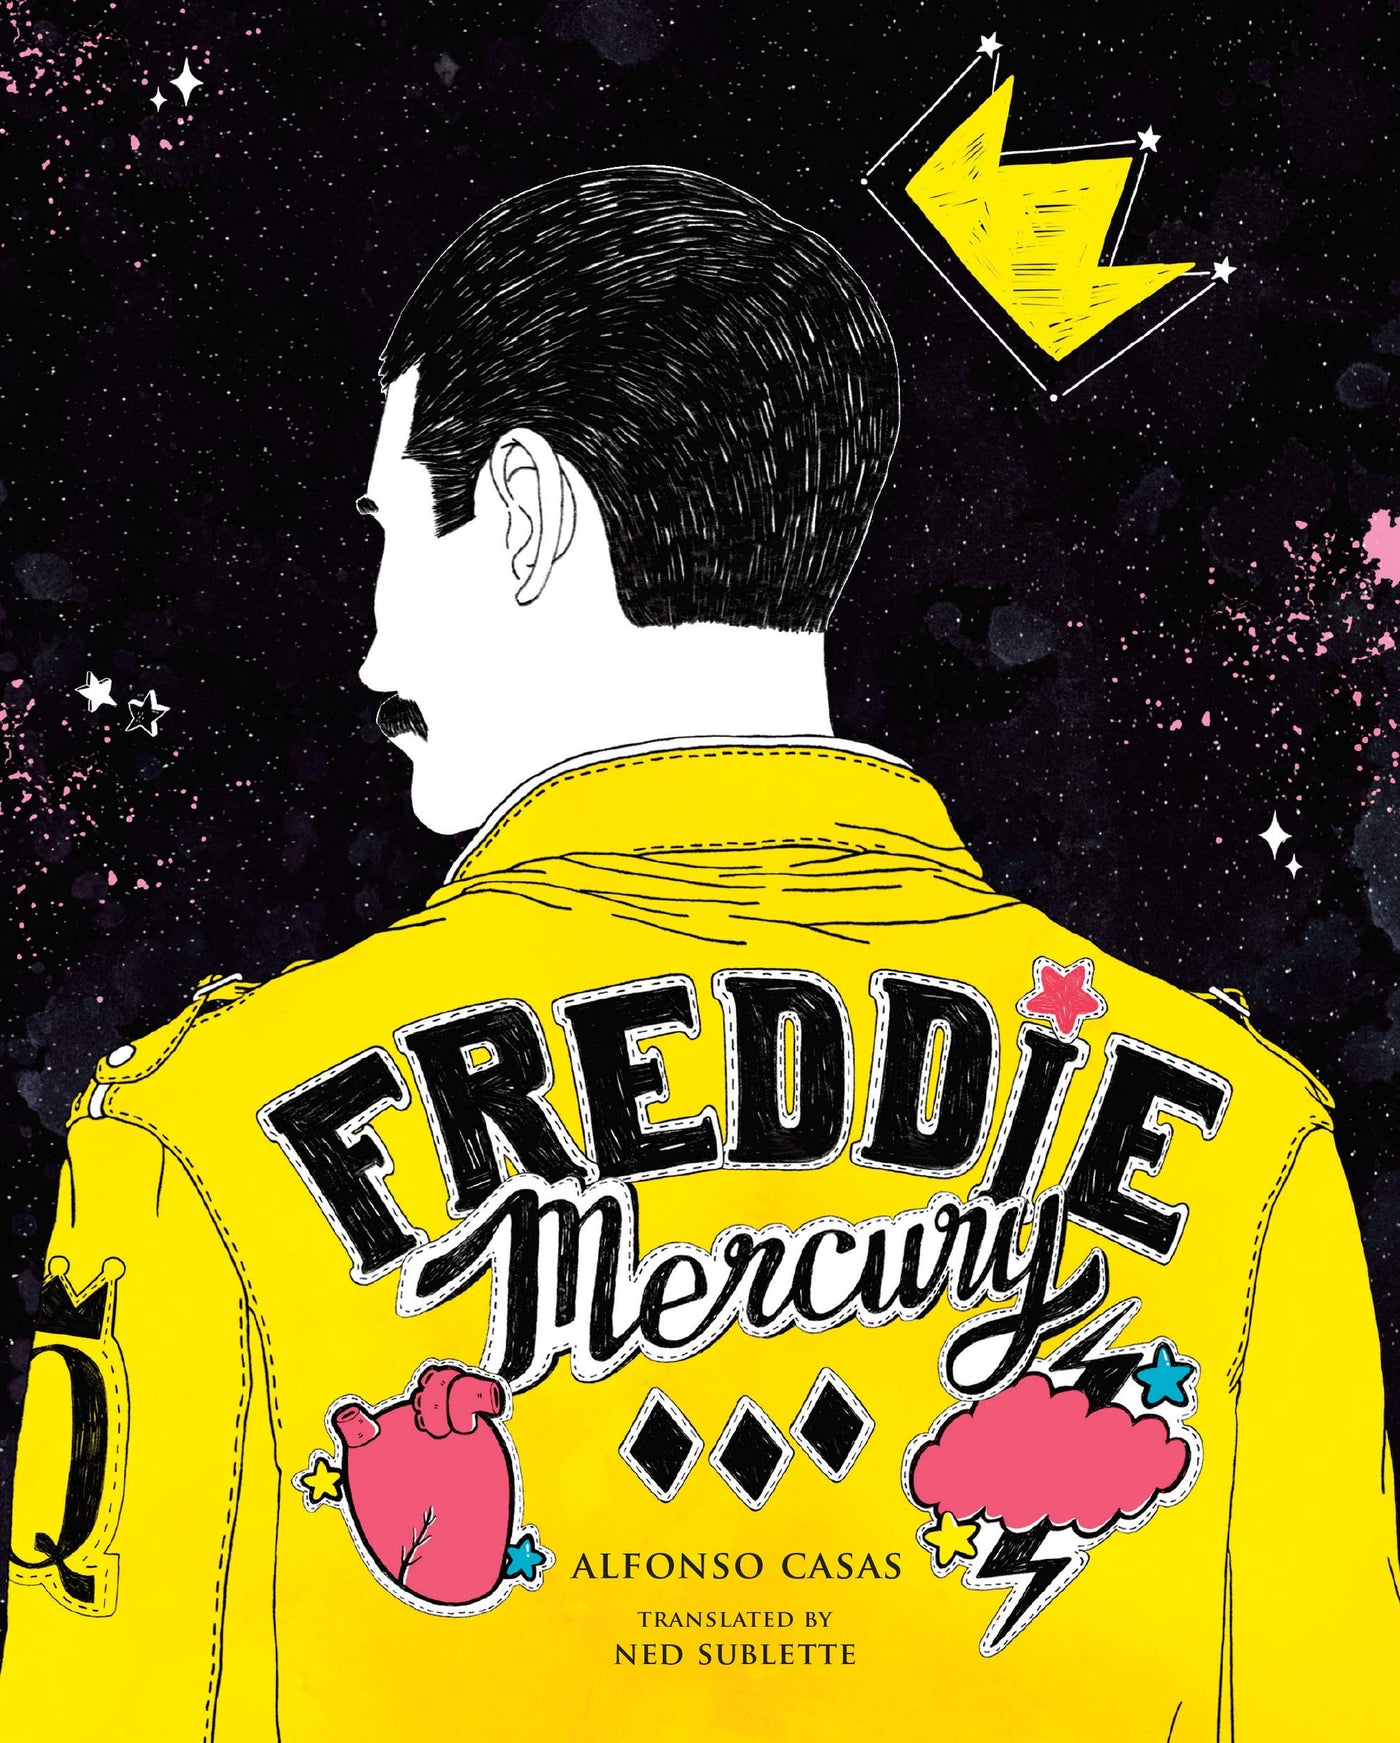 Freddie Mercury: An Illustrated Life by Alfonso Casas